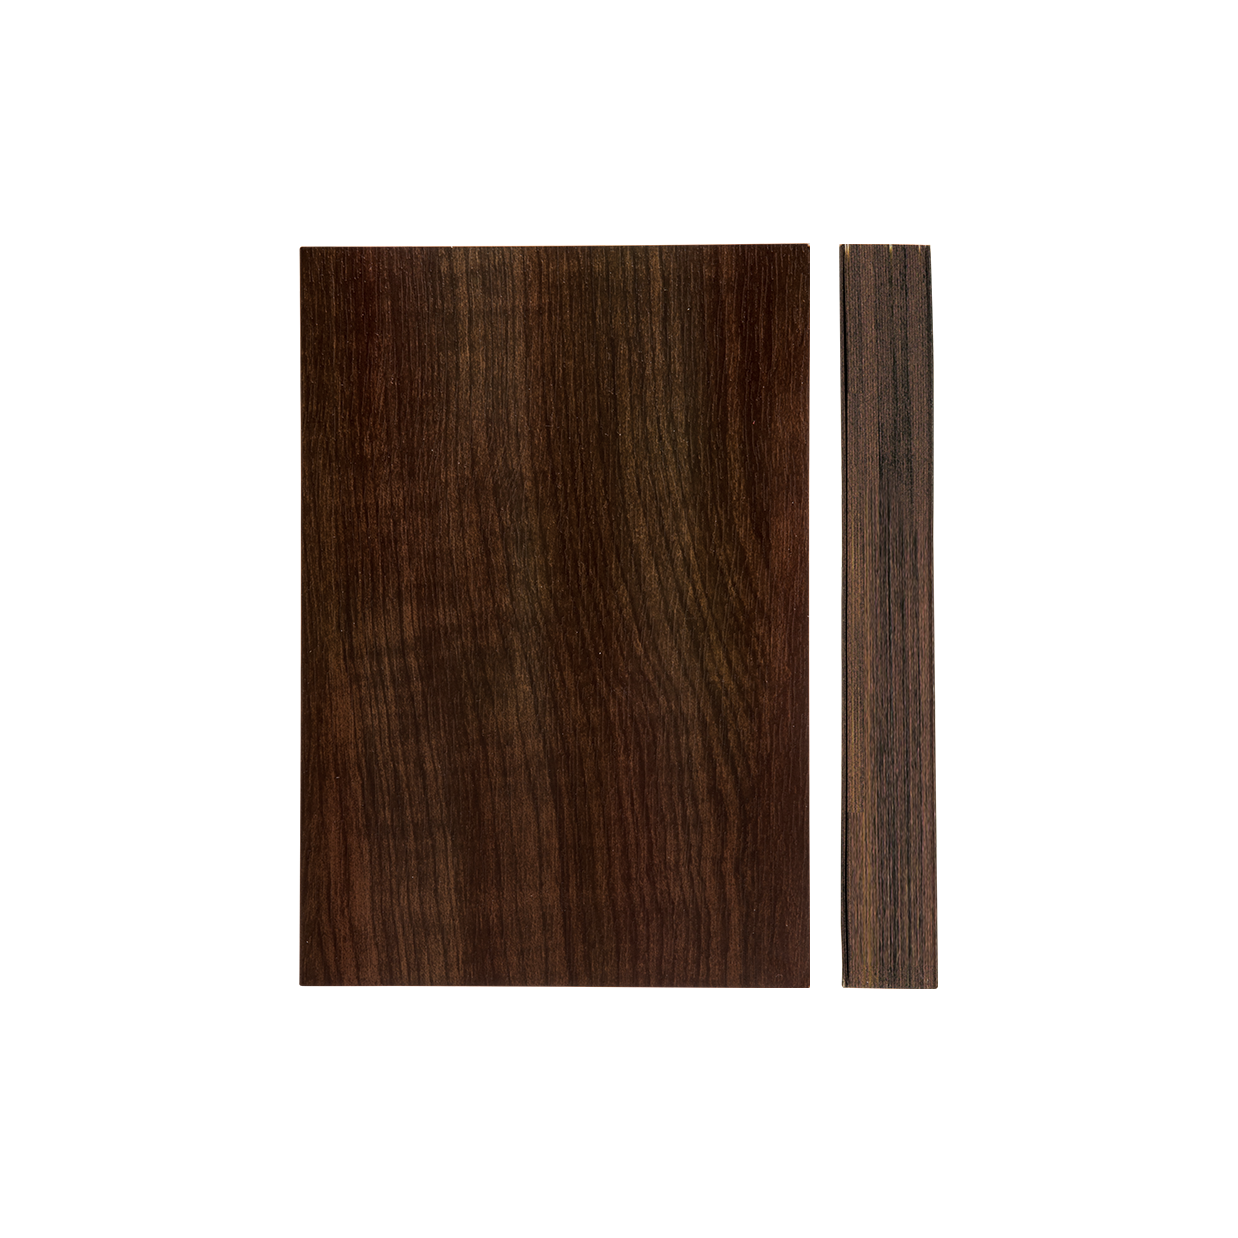 Daycraft Slab Notebook - Mahogany, A6